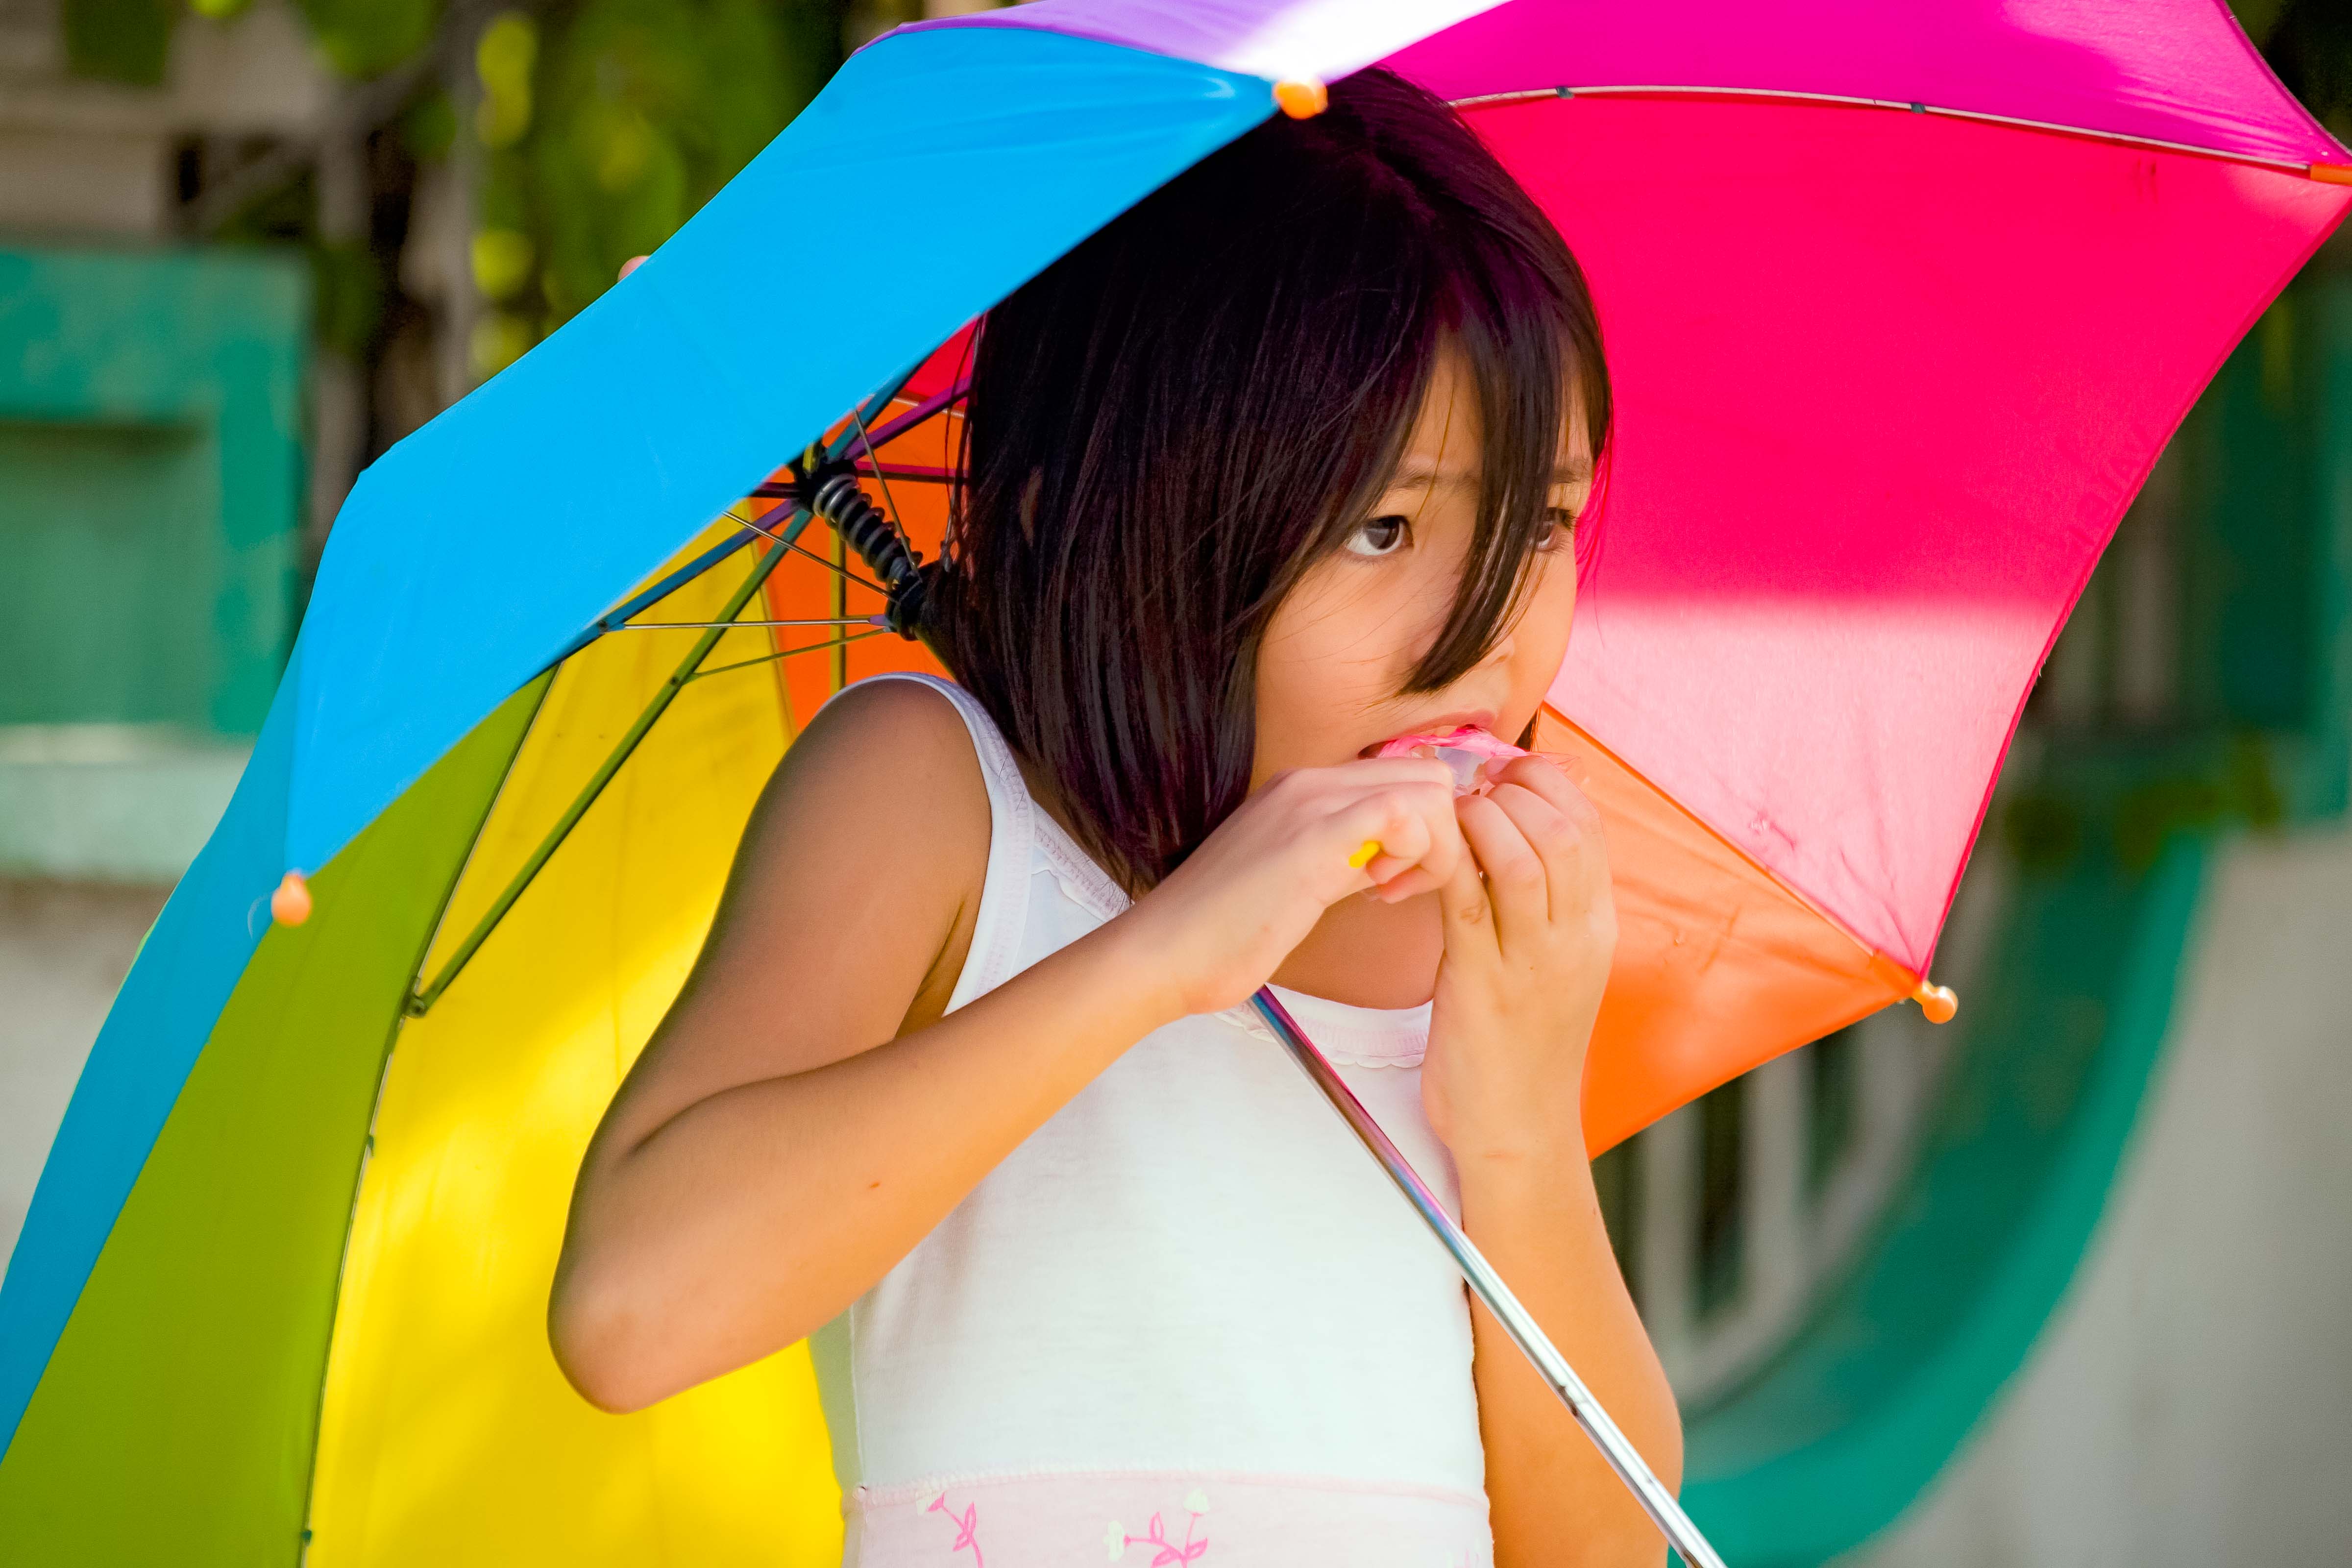 Philippines, Bataan Province, Umbrella Girl, 2007